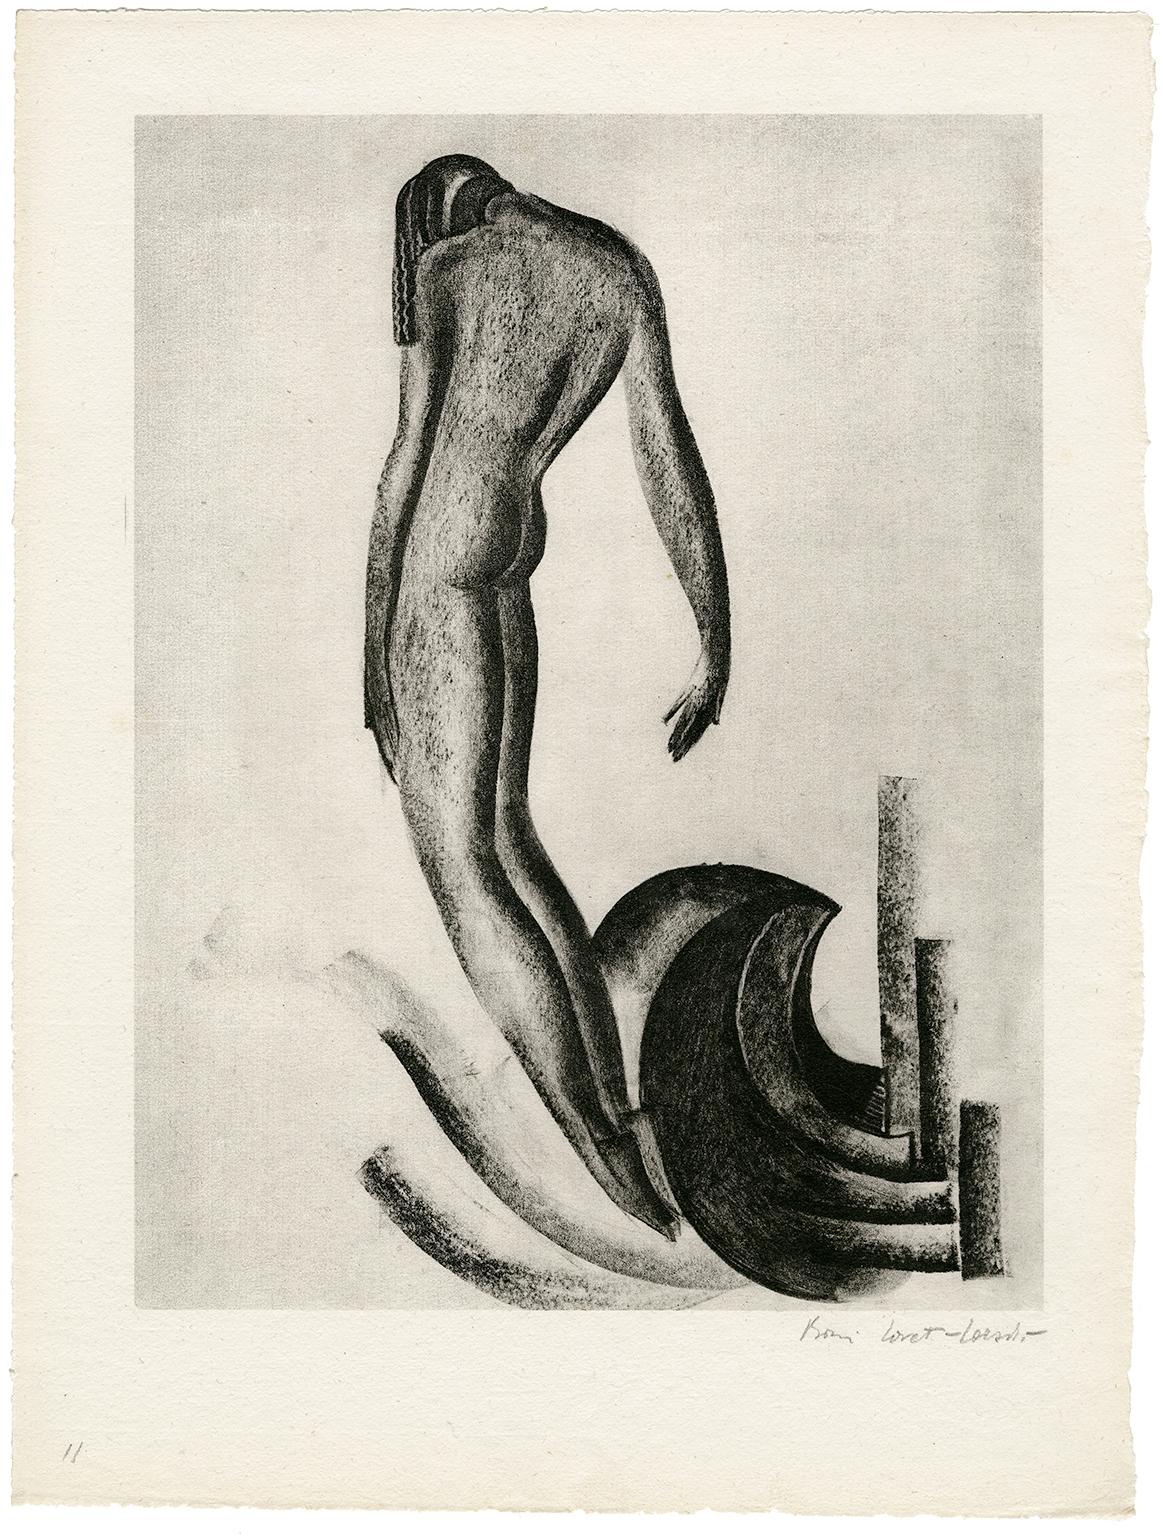 Untitled (Nude with Wave) - Print by Boris Lovet-Lorski